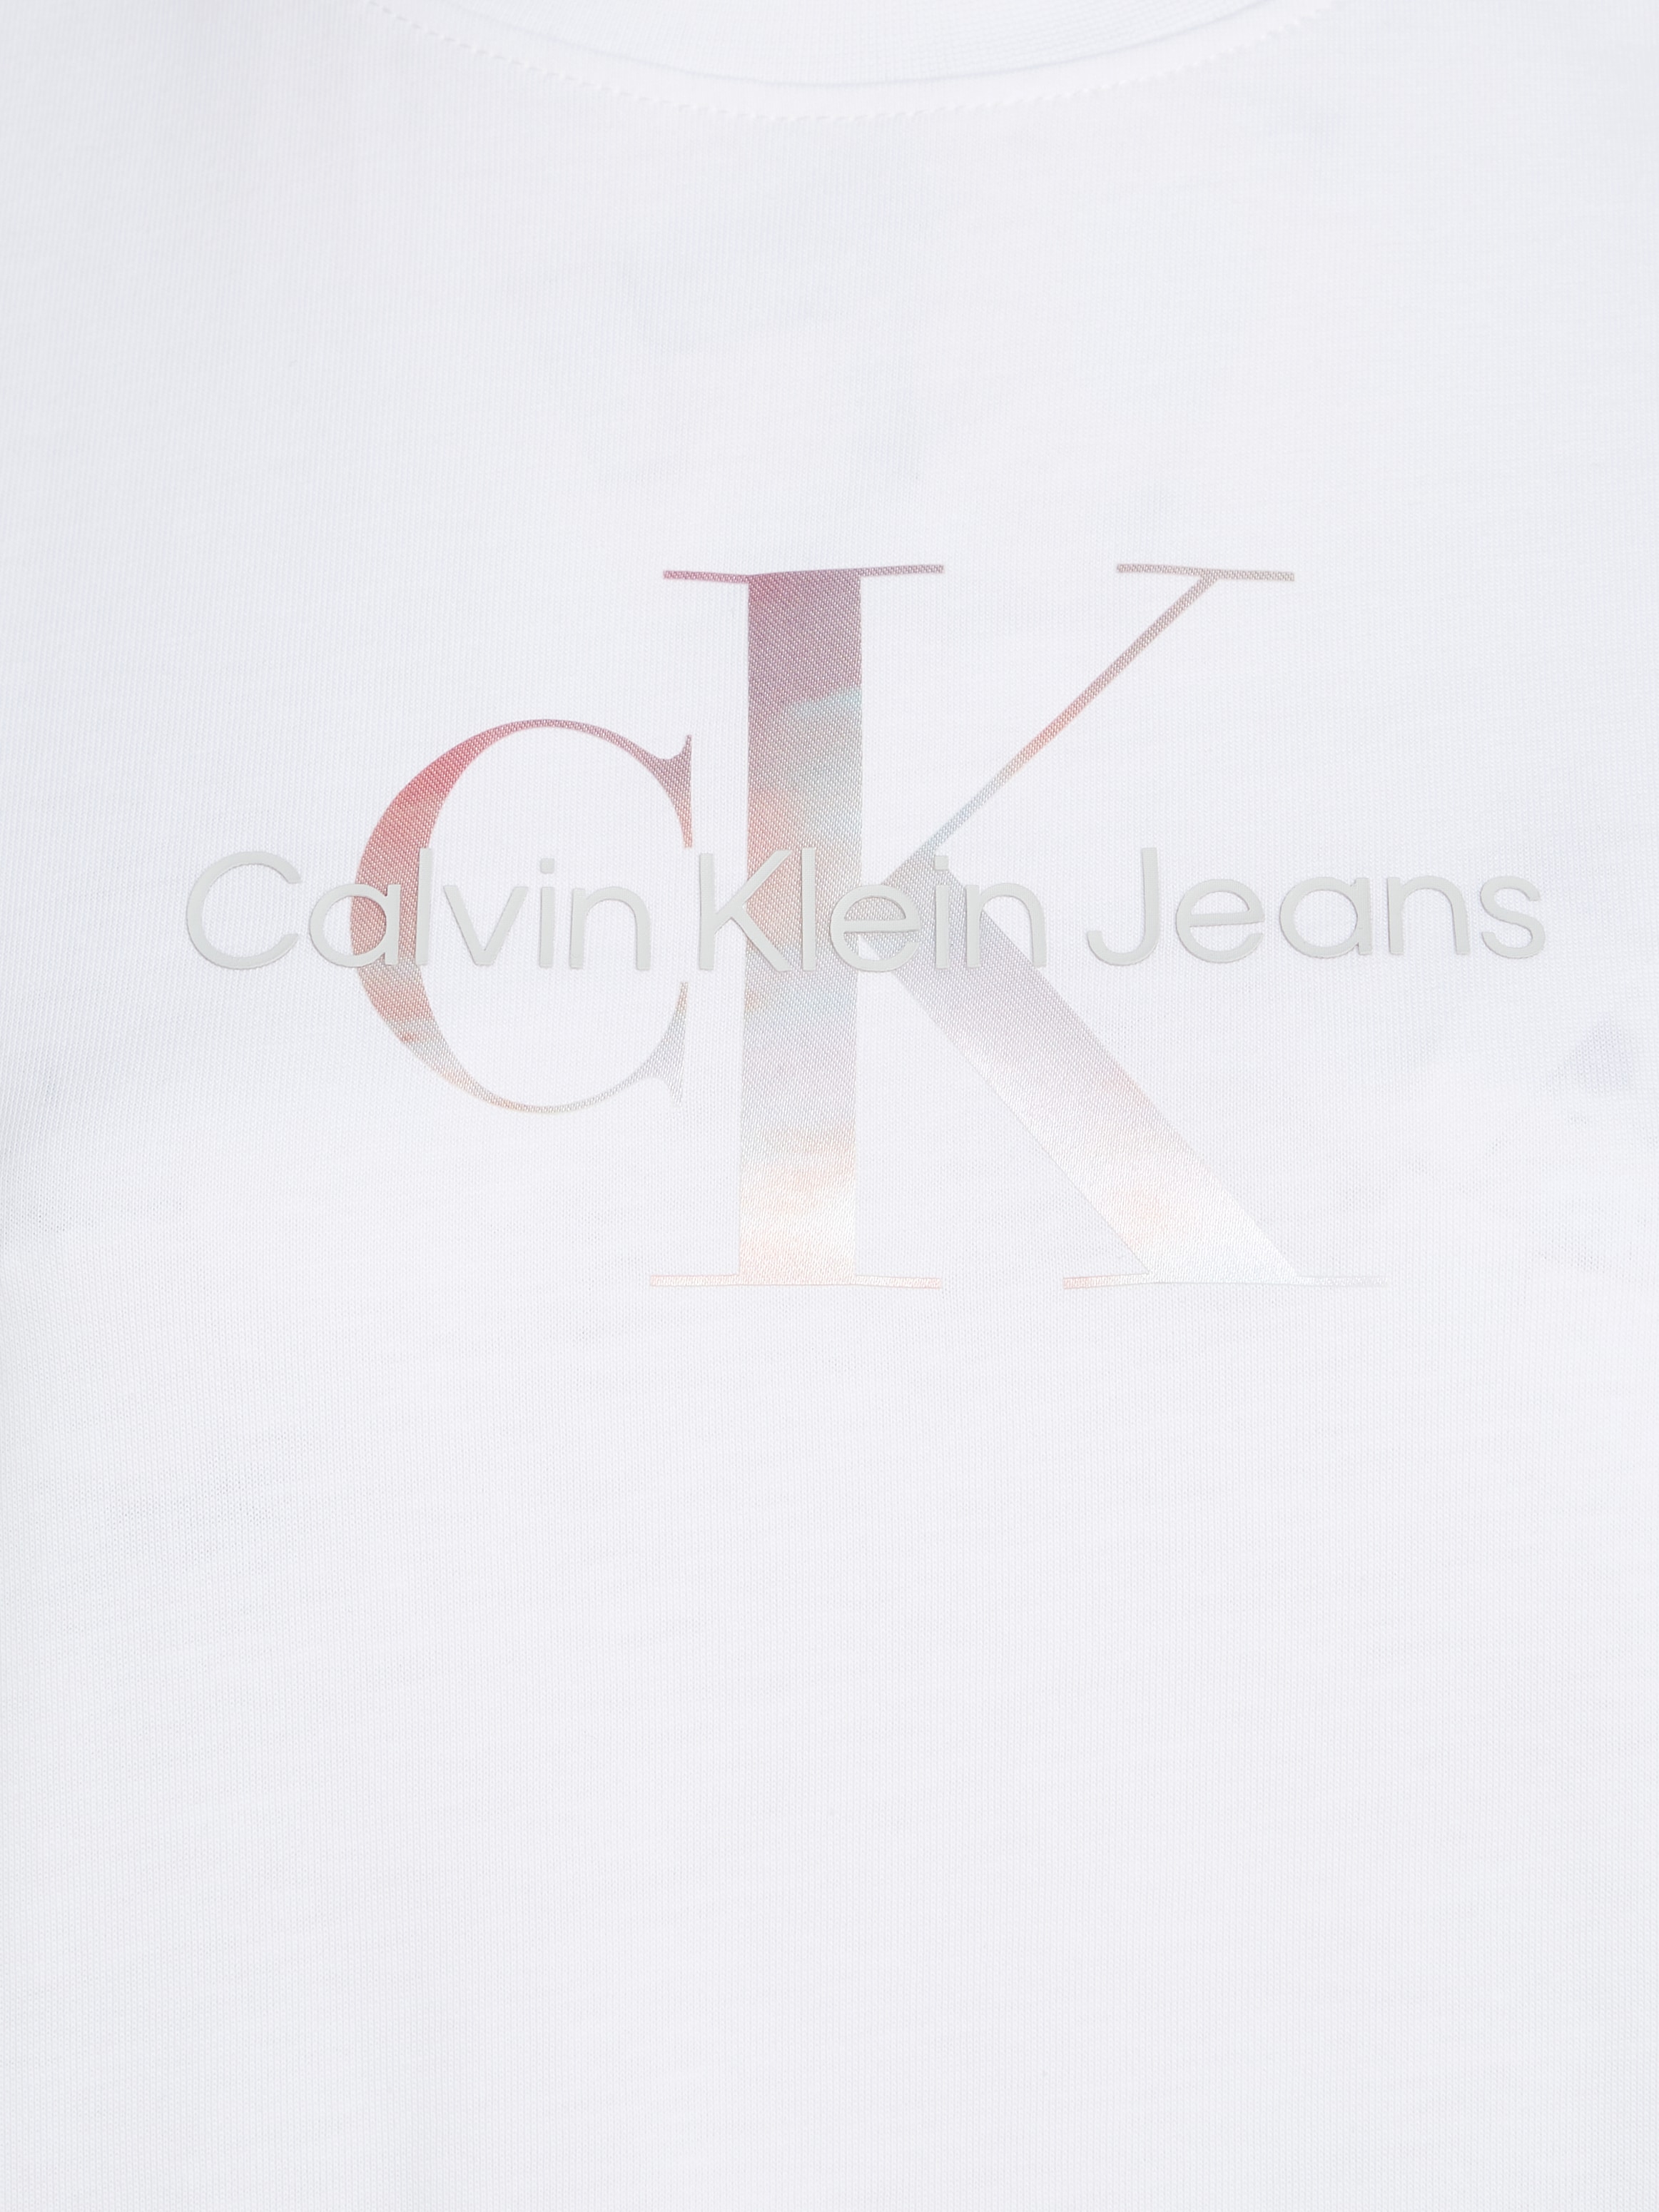 Calvin Klein Jeans T-Shirt »DIFFUSED MONOLOGO REGULAR TEE«, mit Logoschriftzug